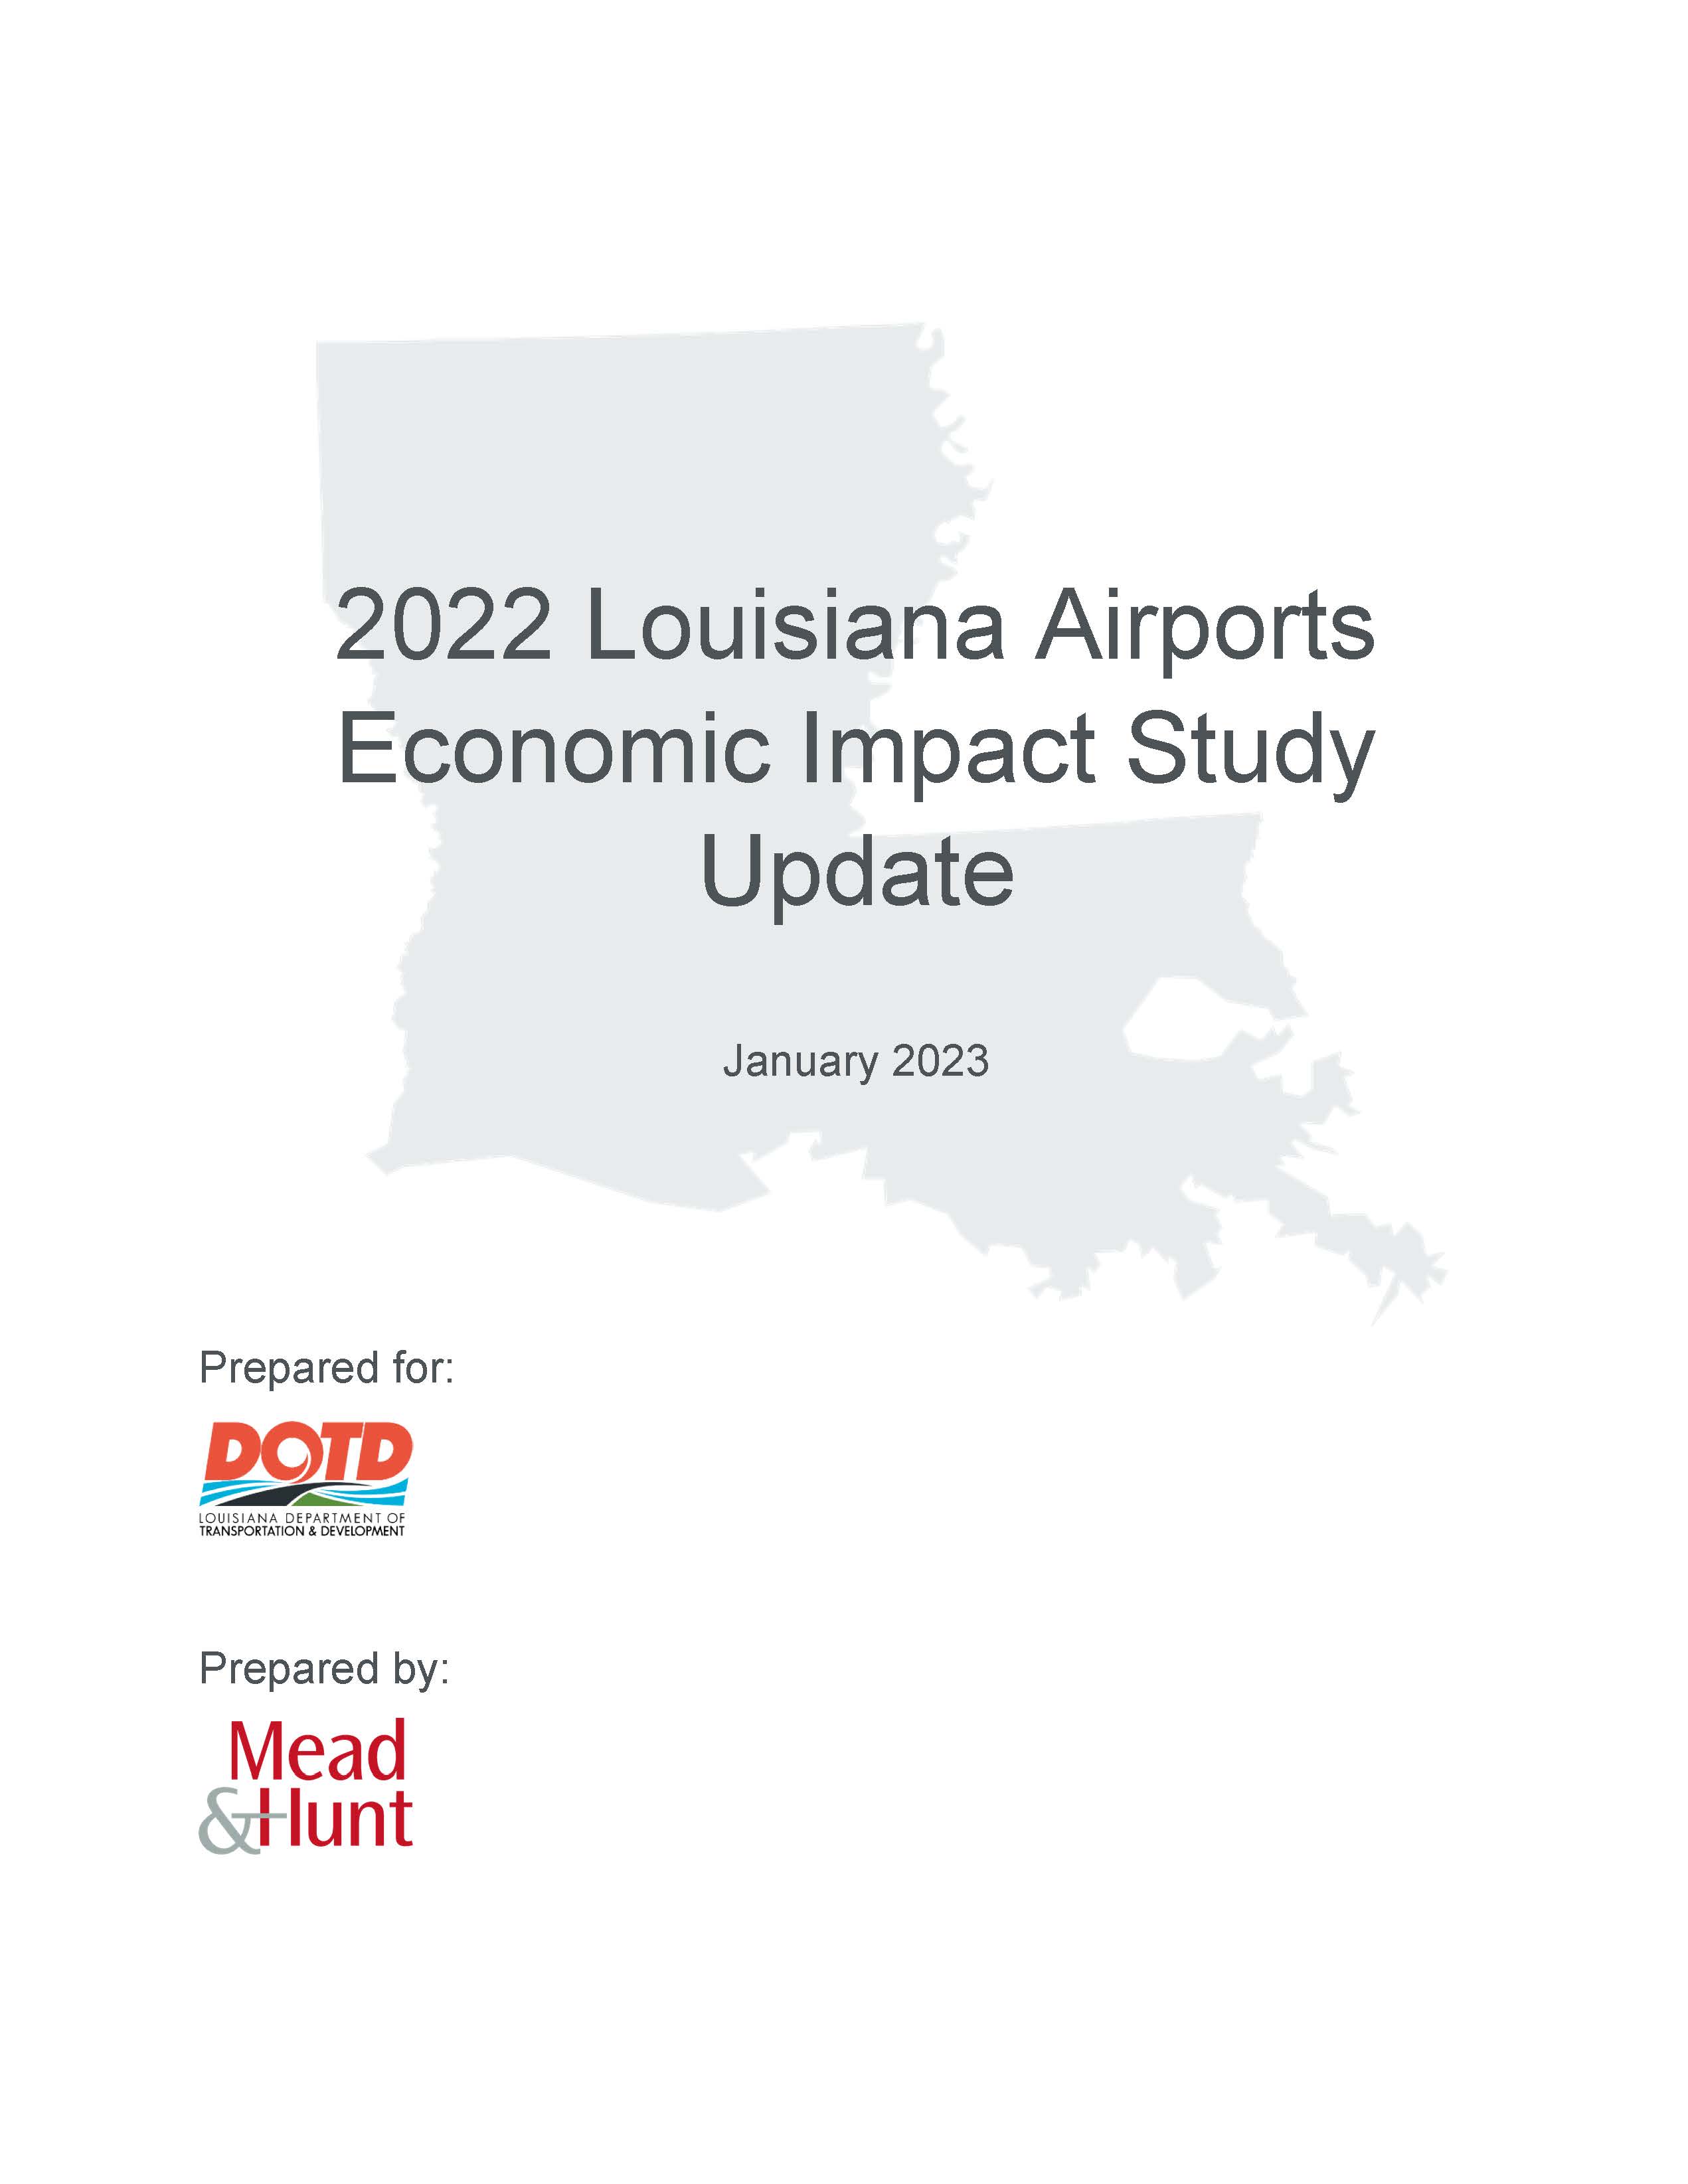 Cover Photo_Louisiana Airports Economic Impact Study Update 2022.jpg